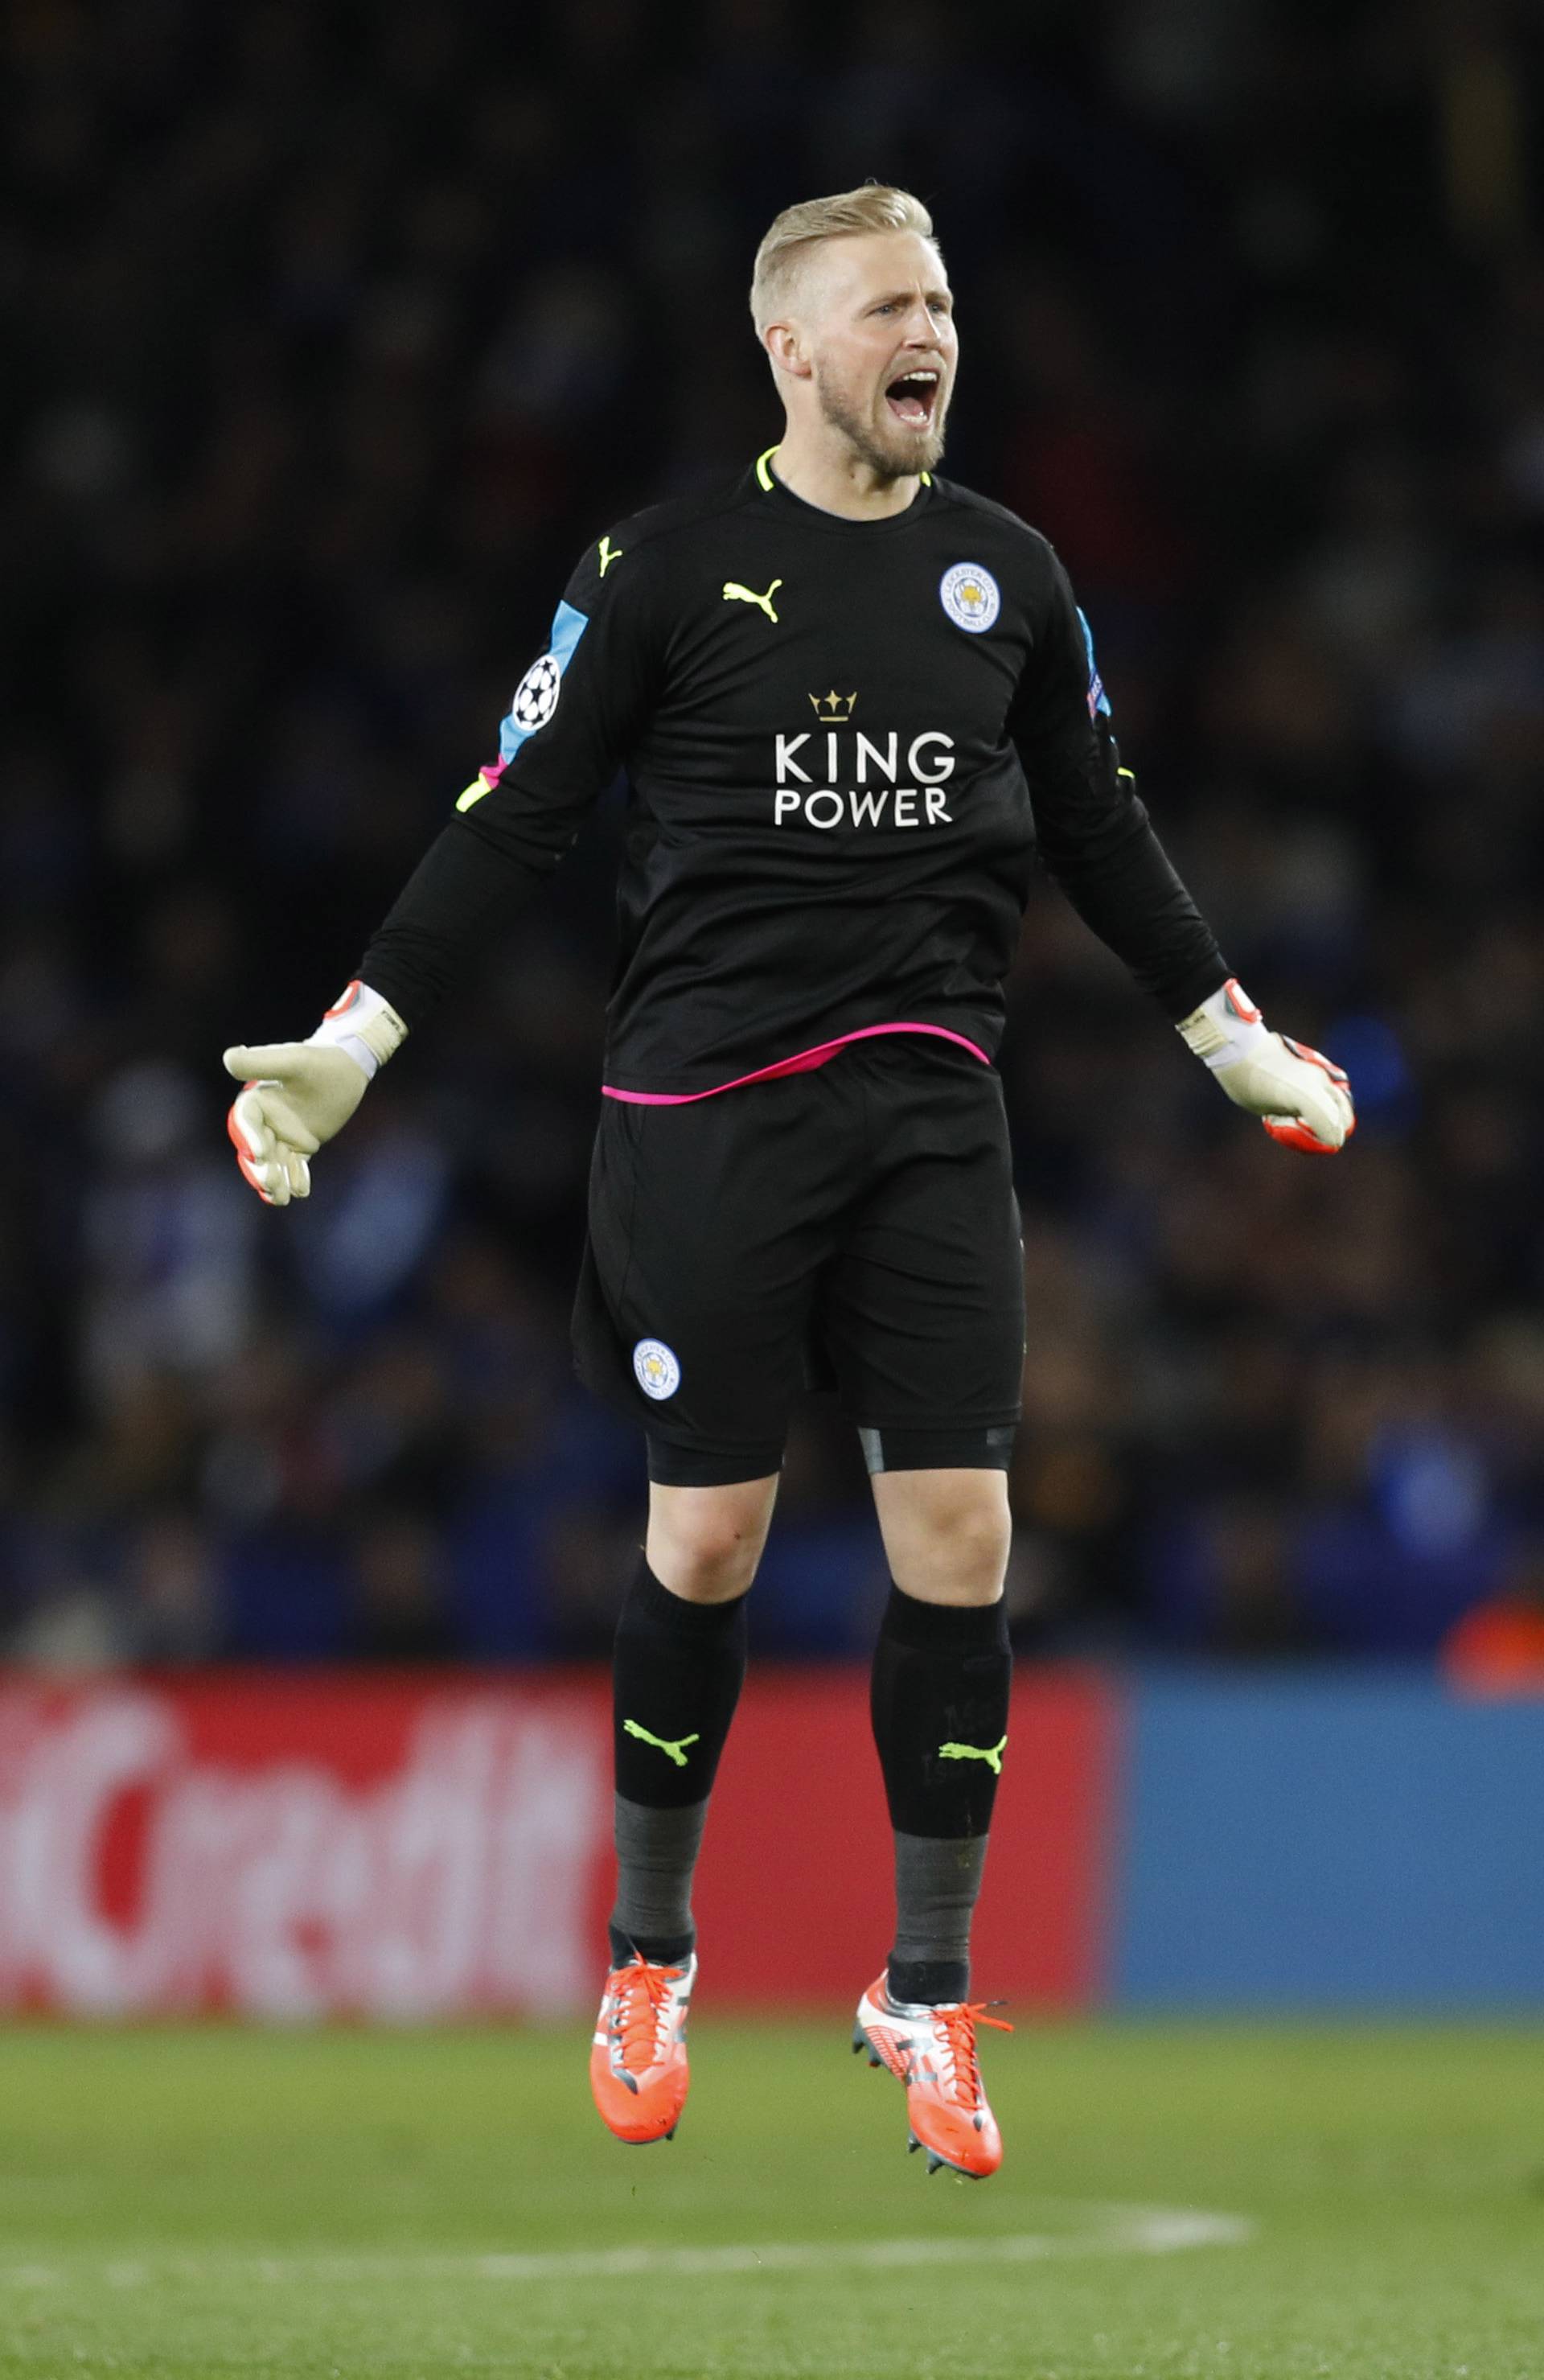 Leicester City's Kasper Schmeichel gestures to the crowd